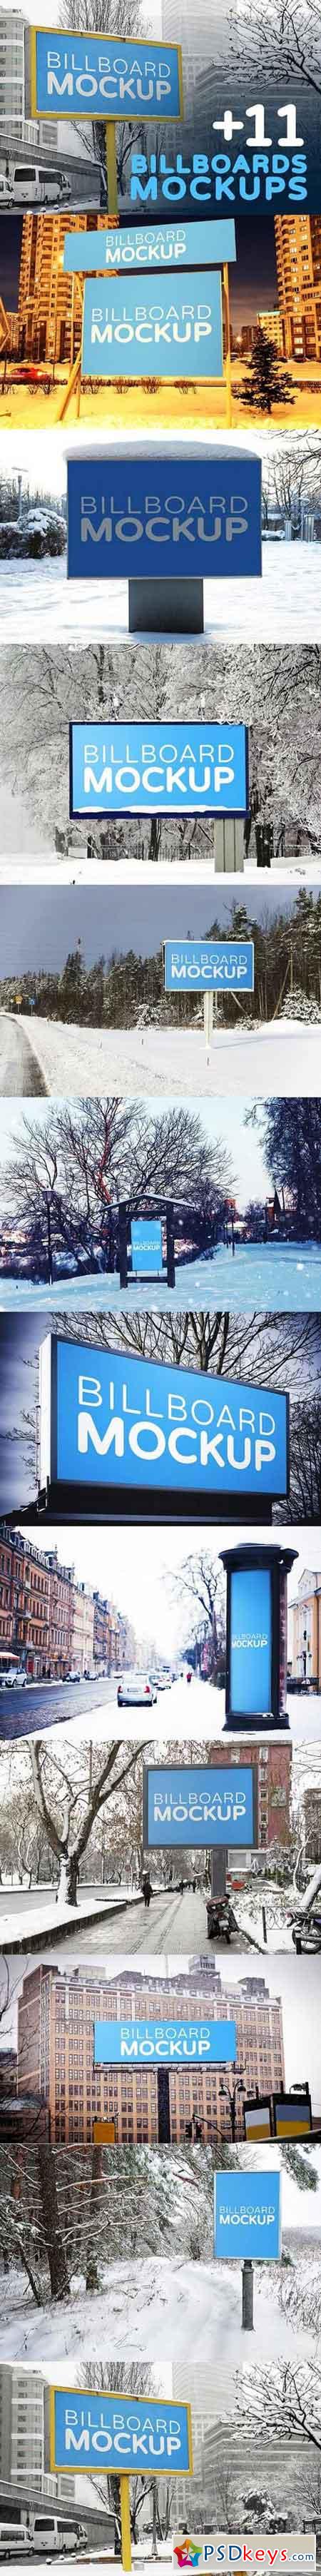 Billboards Mockups in Winter 1513362